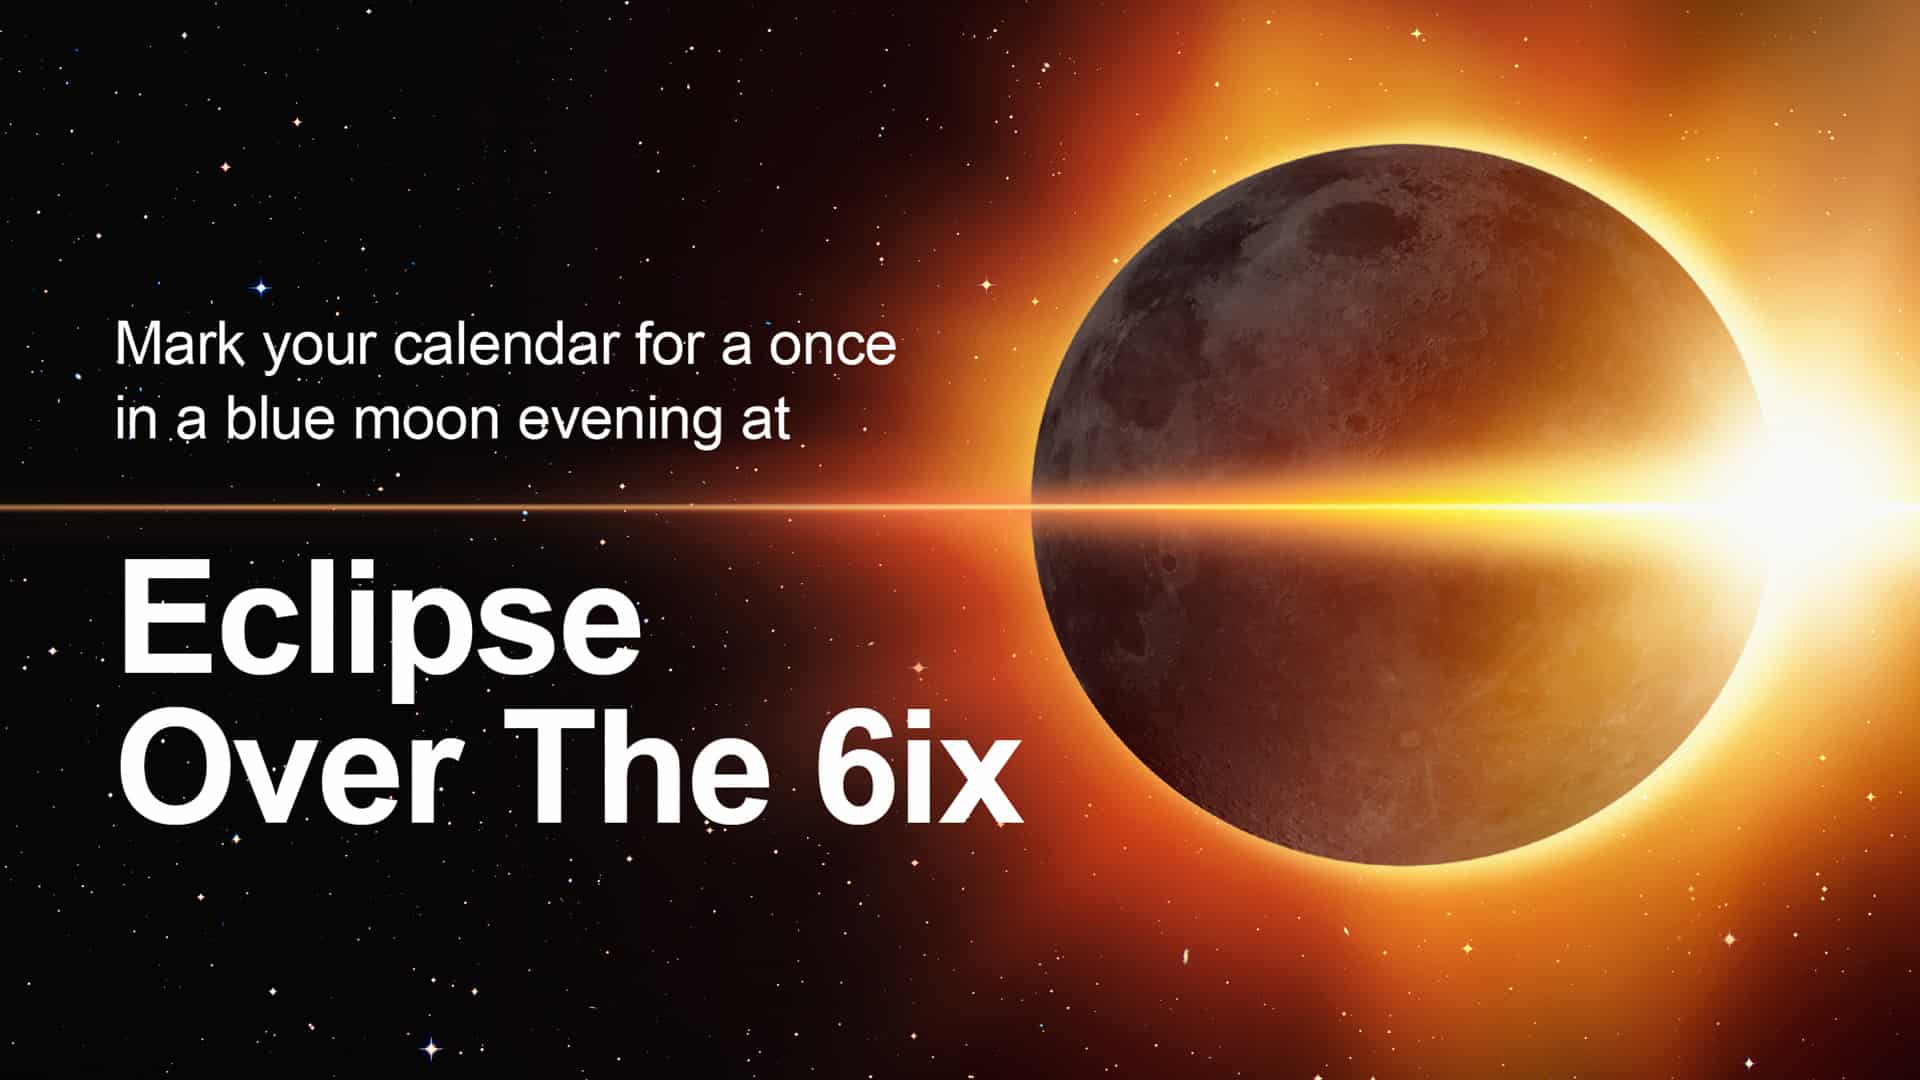 Eclipse Over The 6ix